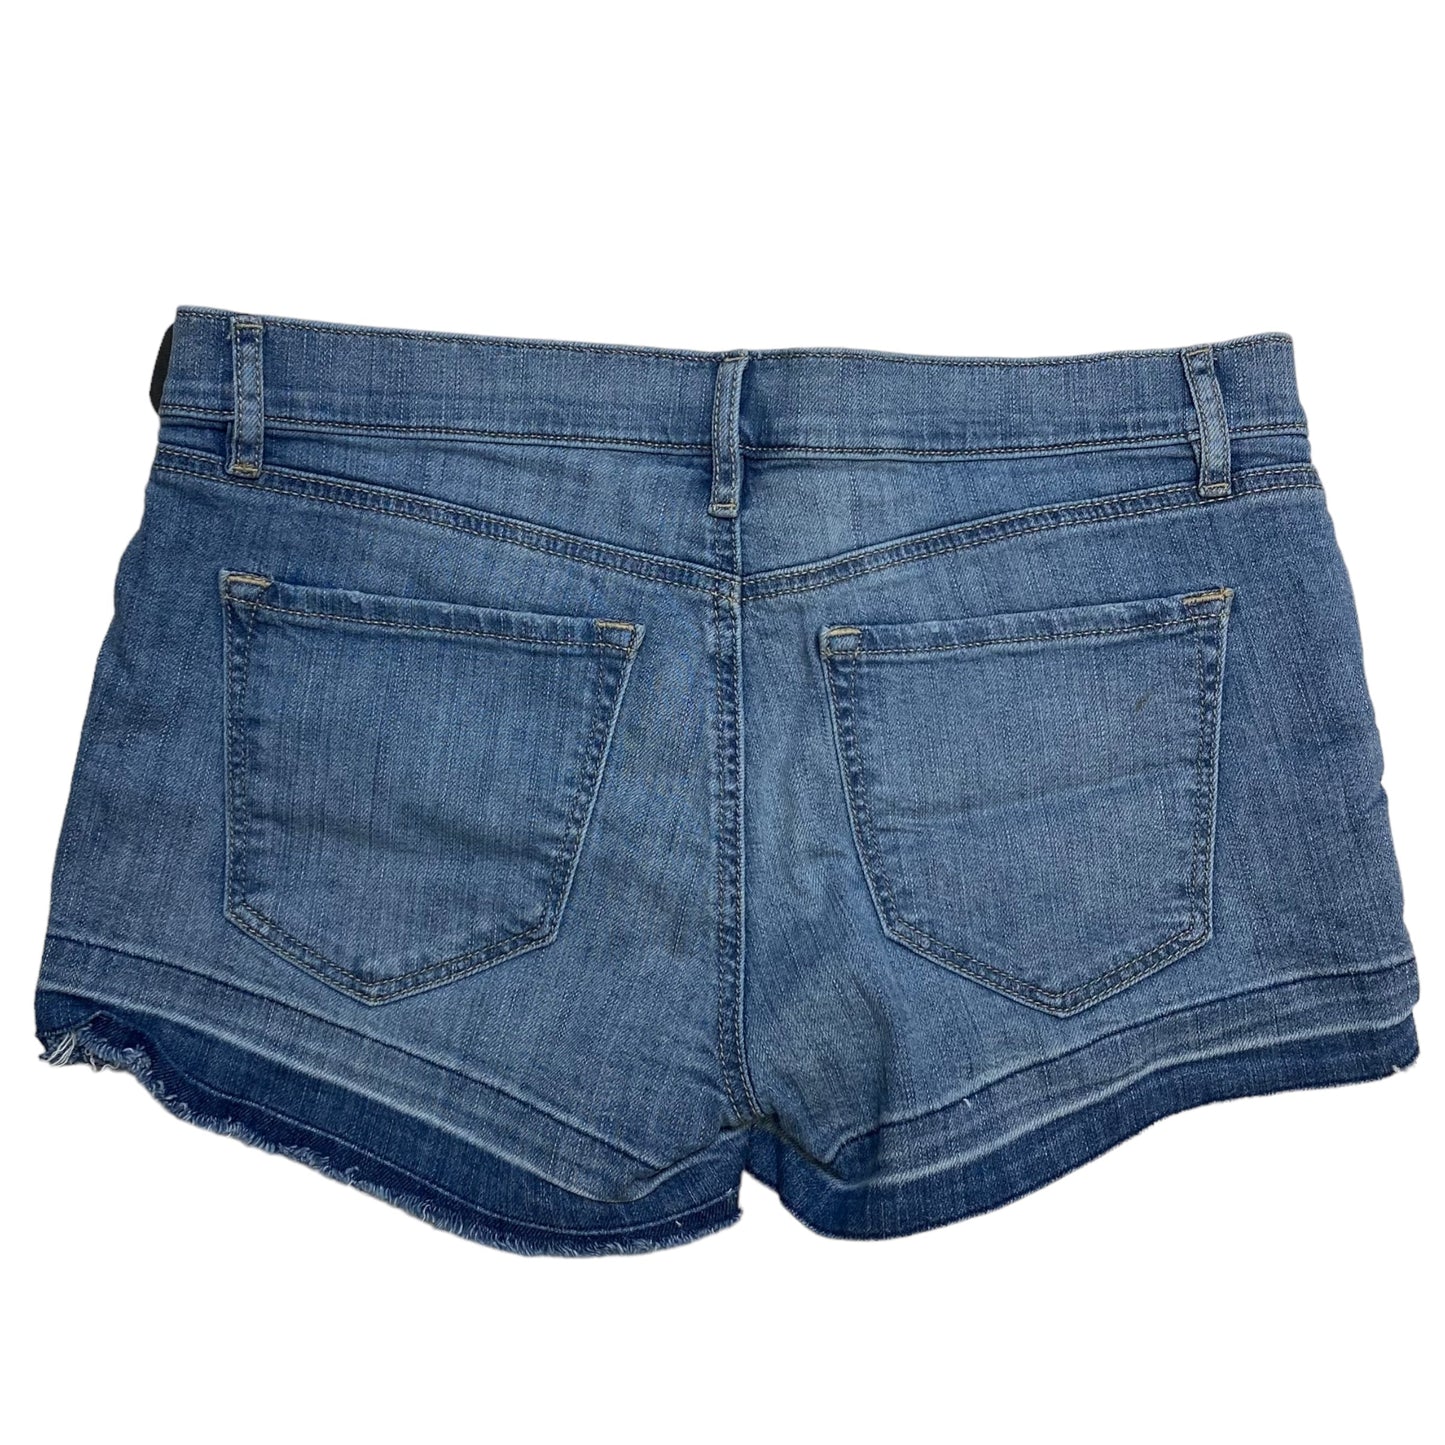 Blue Denim Shorts Loft, Size 4